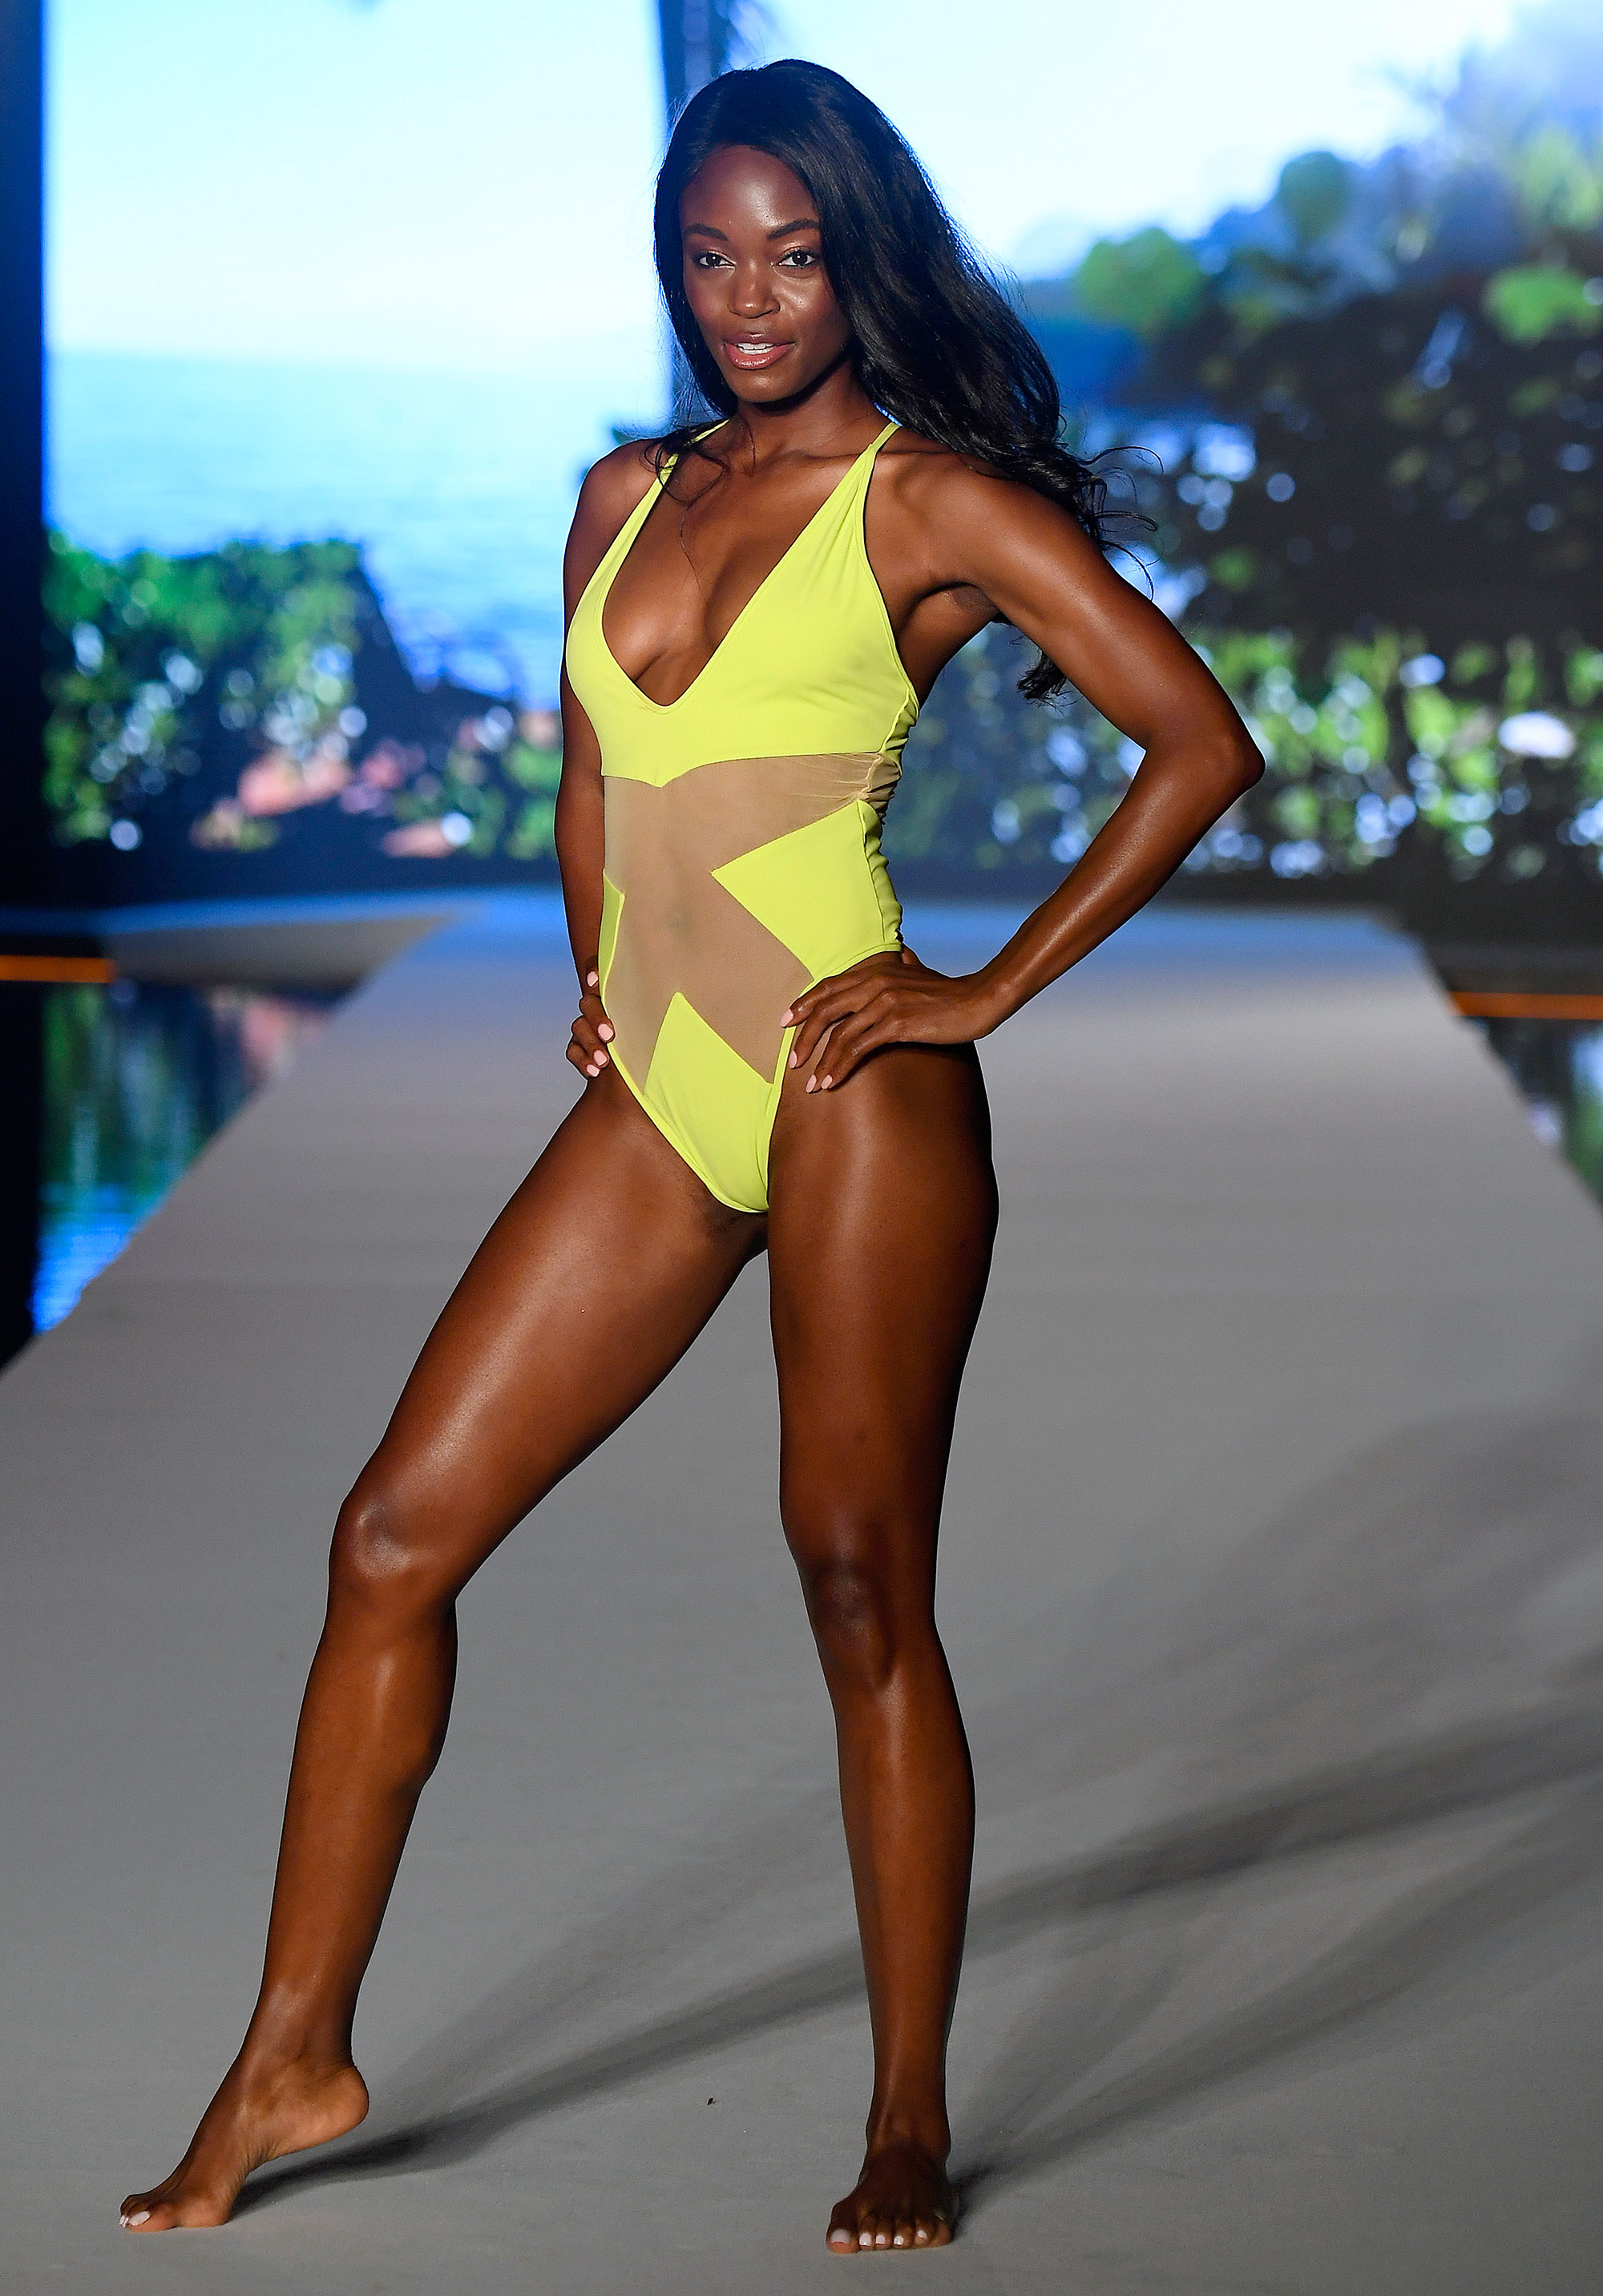 https://www.usmagazine.com/wp-content/uploads/2020/02/Sports-Illustrated-Swimsuit-Models-Tanaye-White-Slide.jpg?quality=78&strip=all